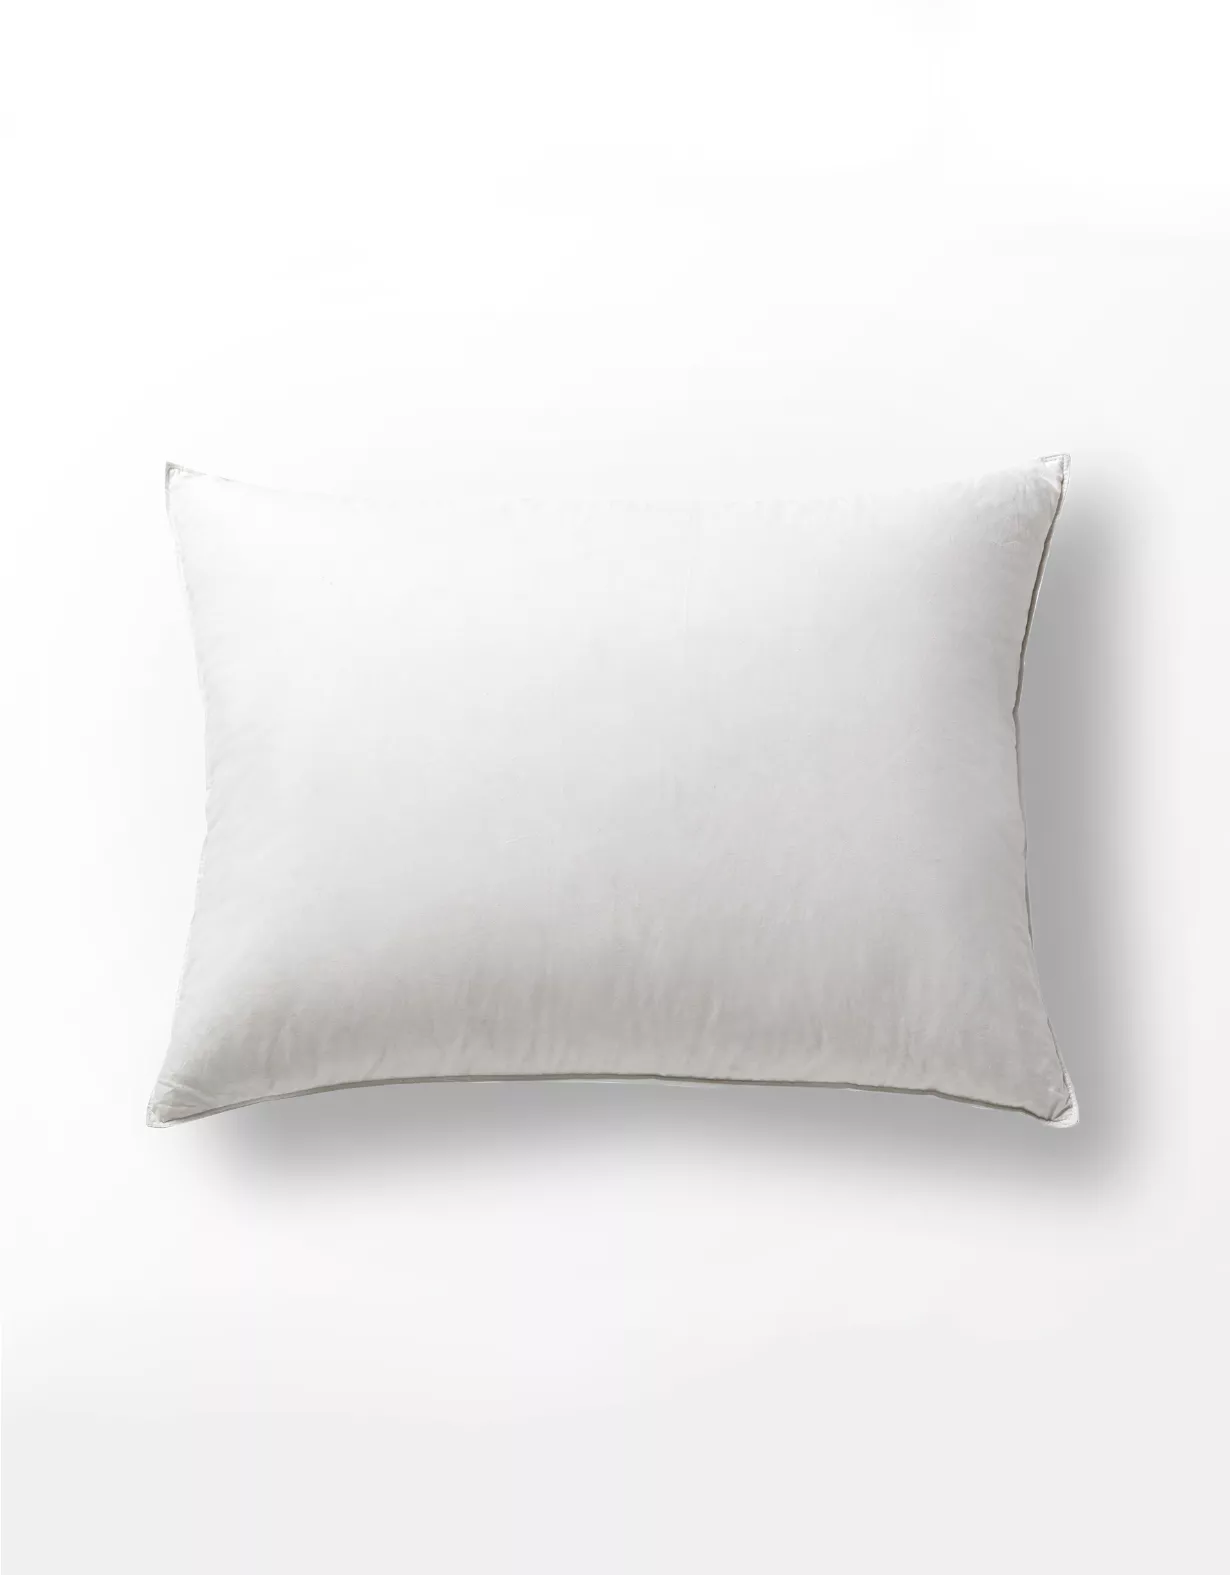 Dormify Down Alternative Pillow